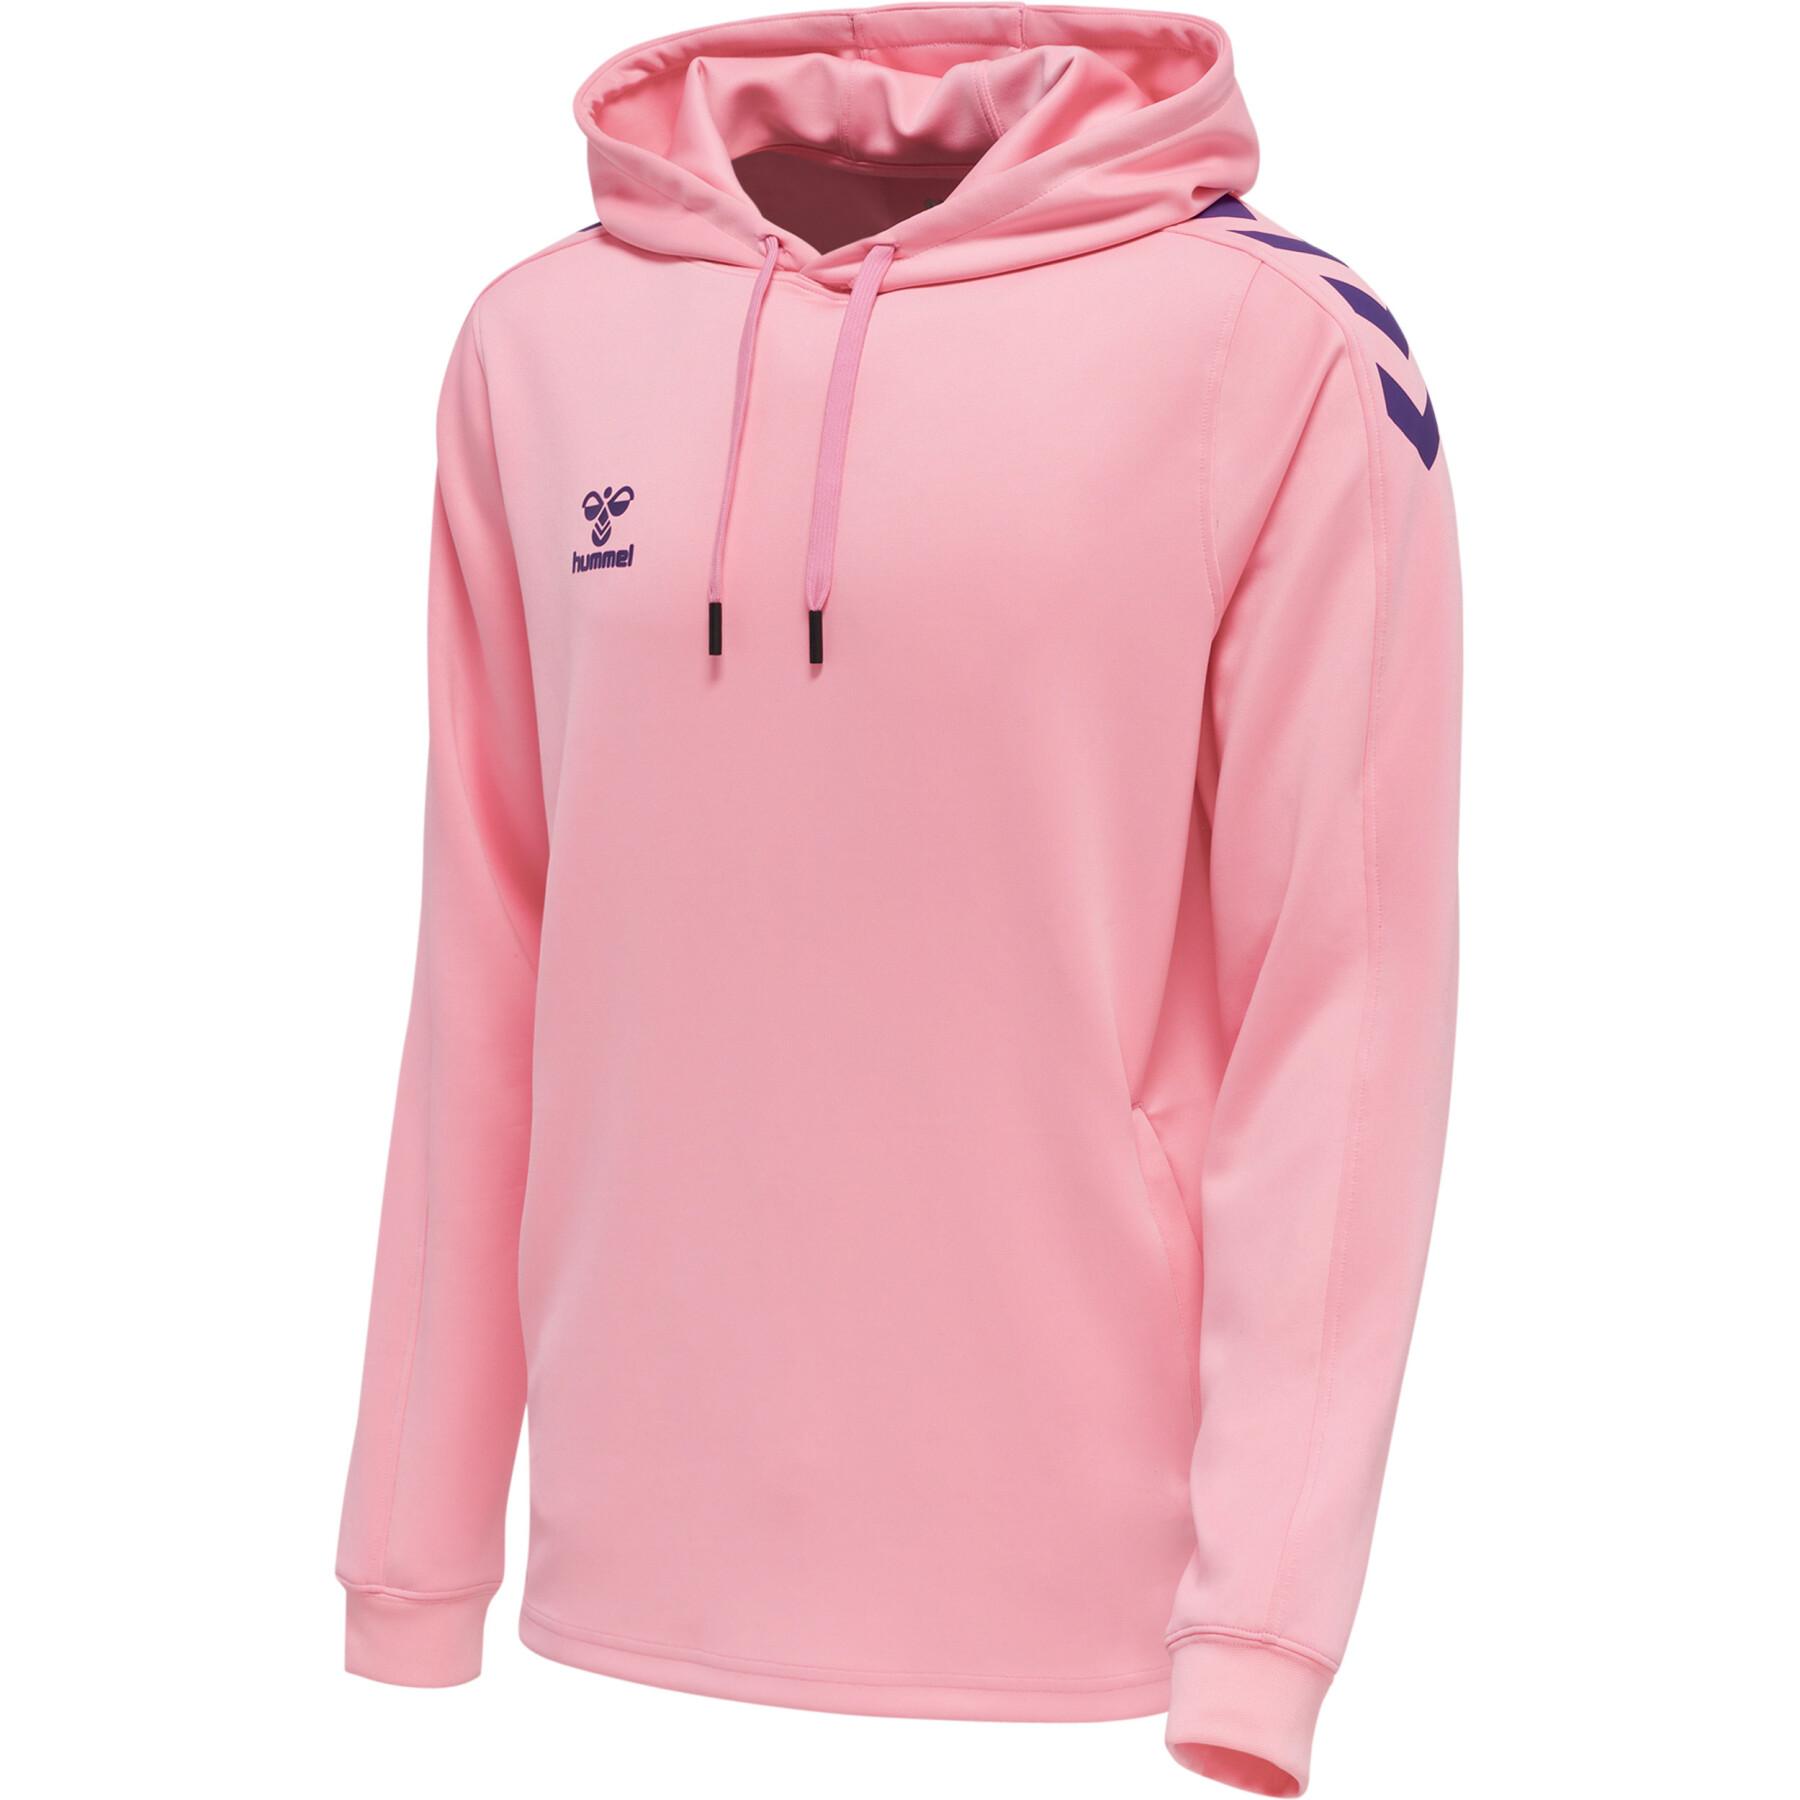 Polyester hooded sweatshirt XK Hummel - Brands - Lifestyle